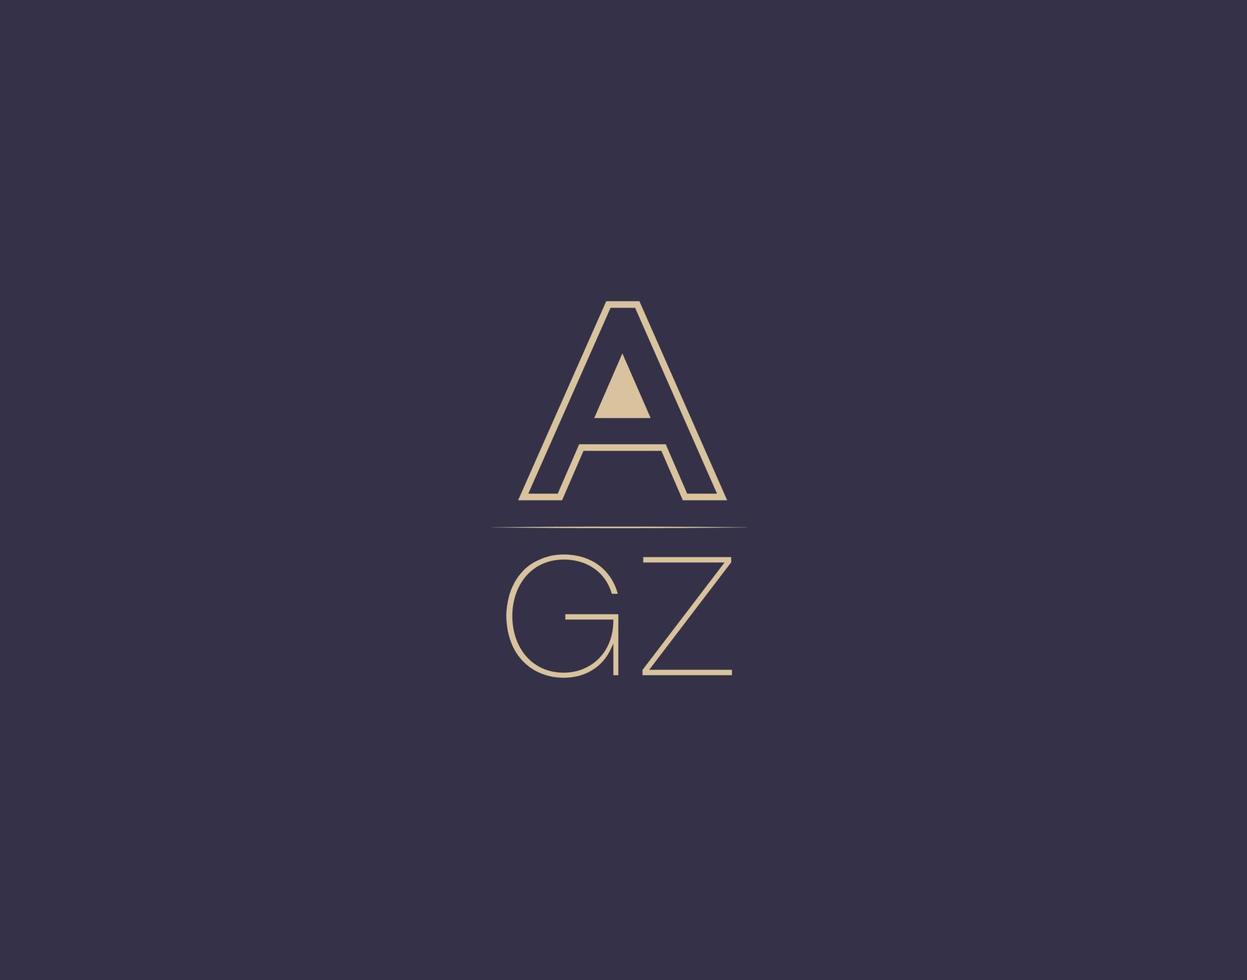 AGZ letter logo design modern minimalist vector images